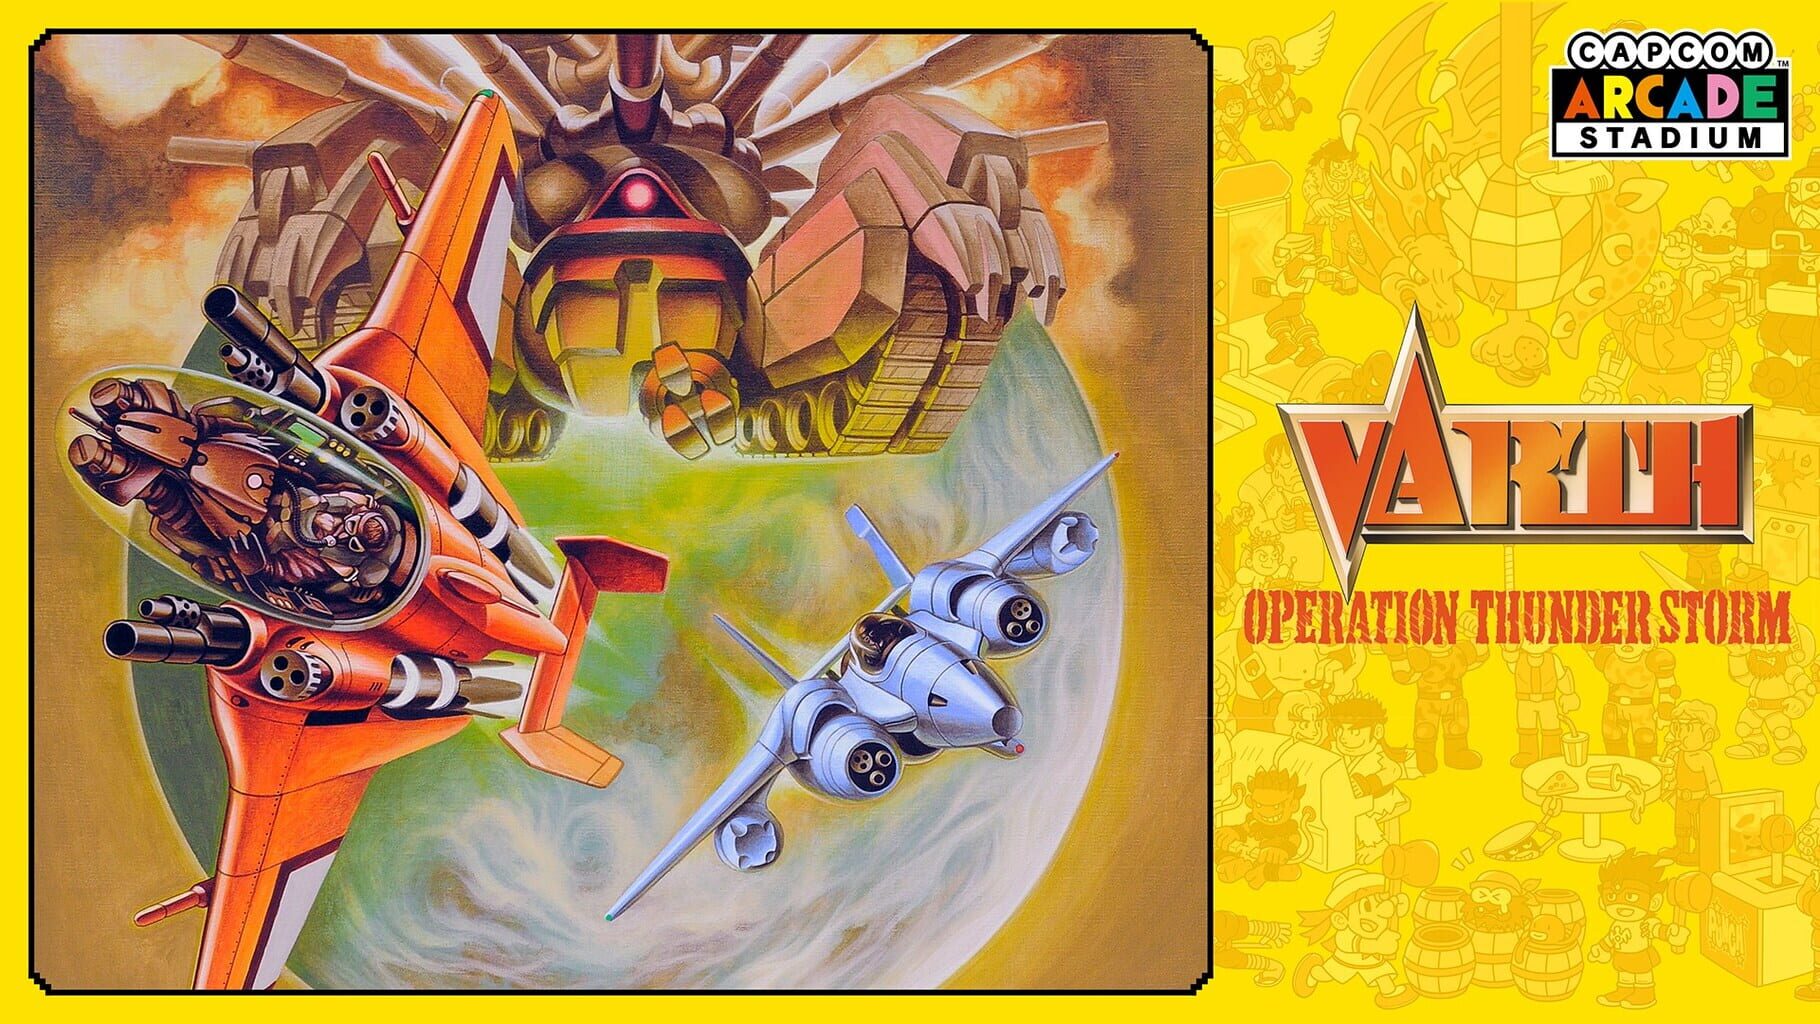 Capcom Arcade Stadium: Varth - Operation Thunderstorm artwork